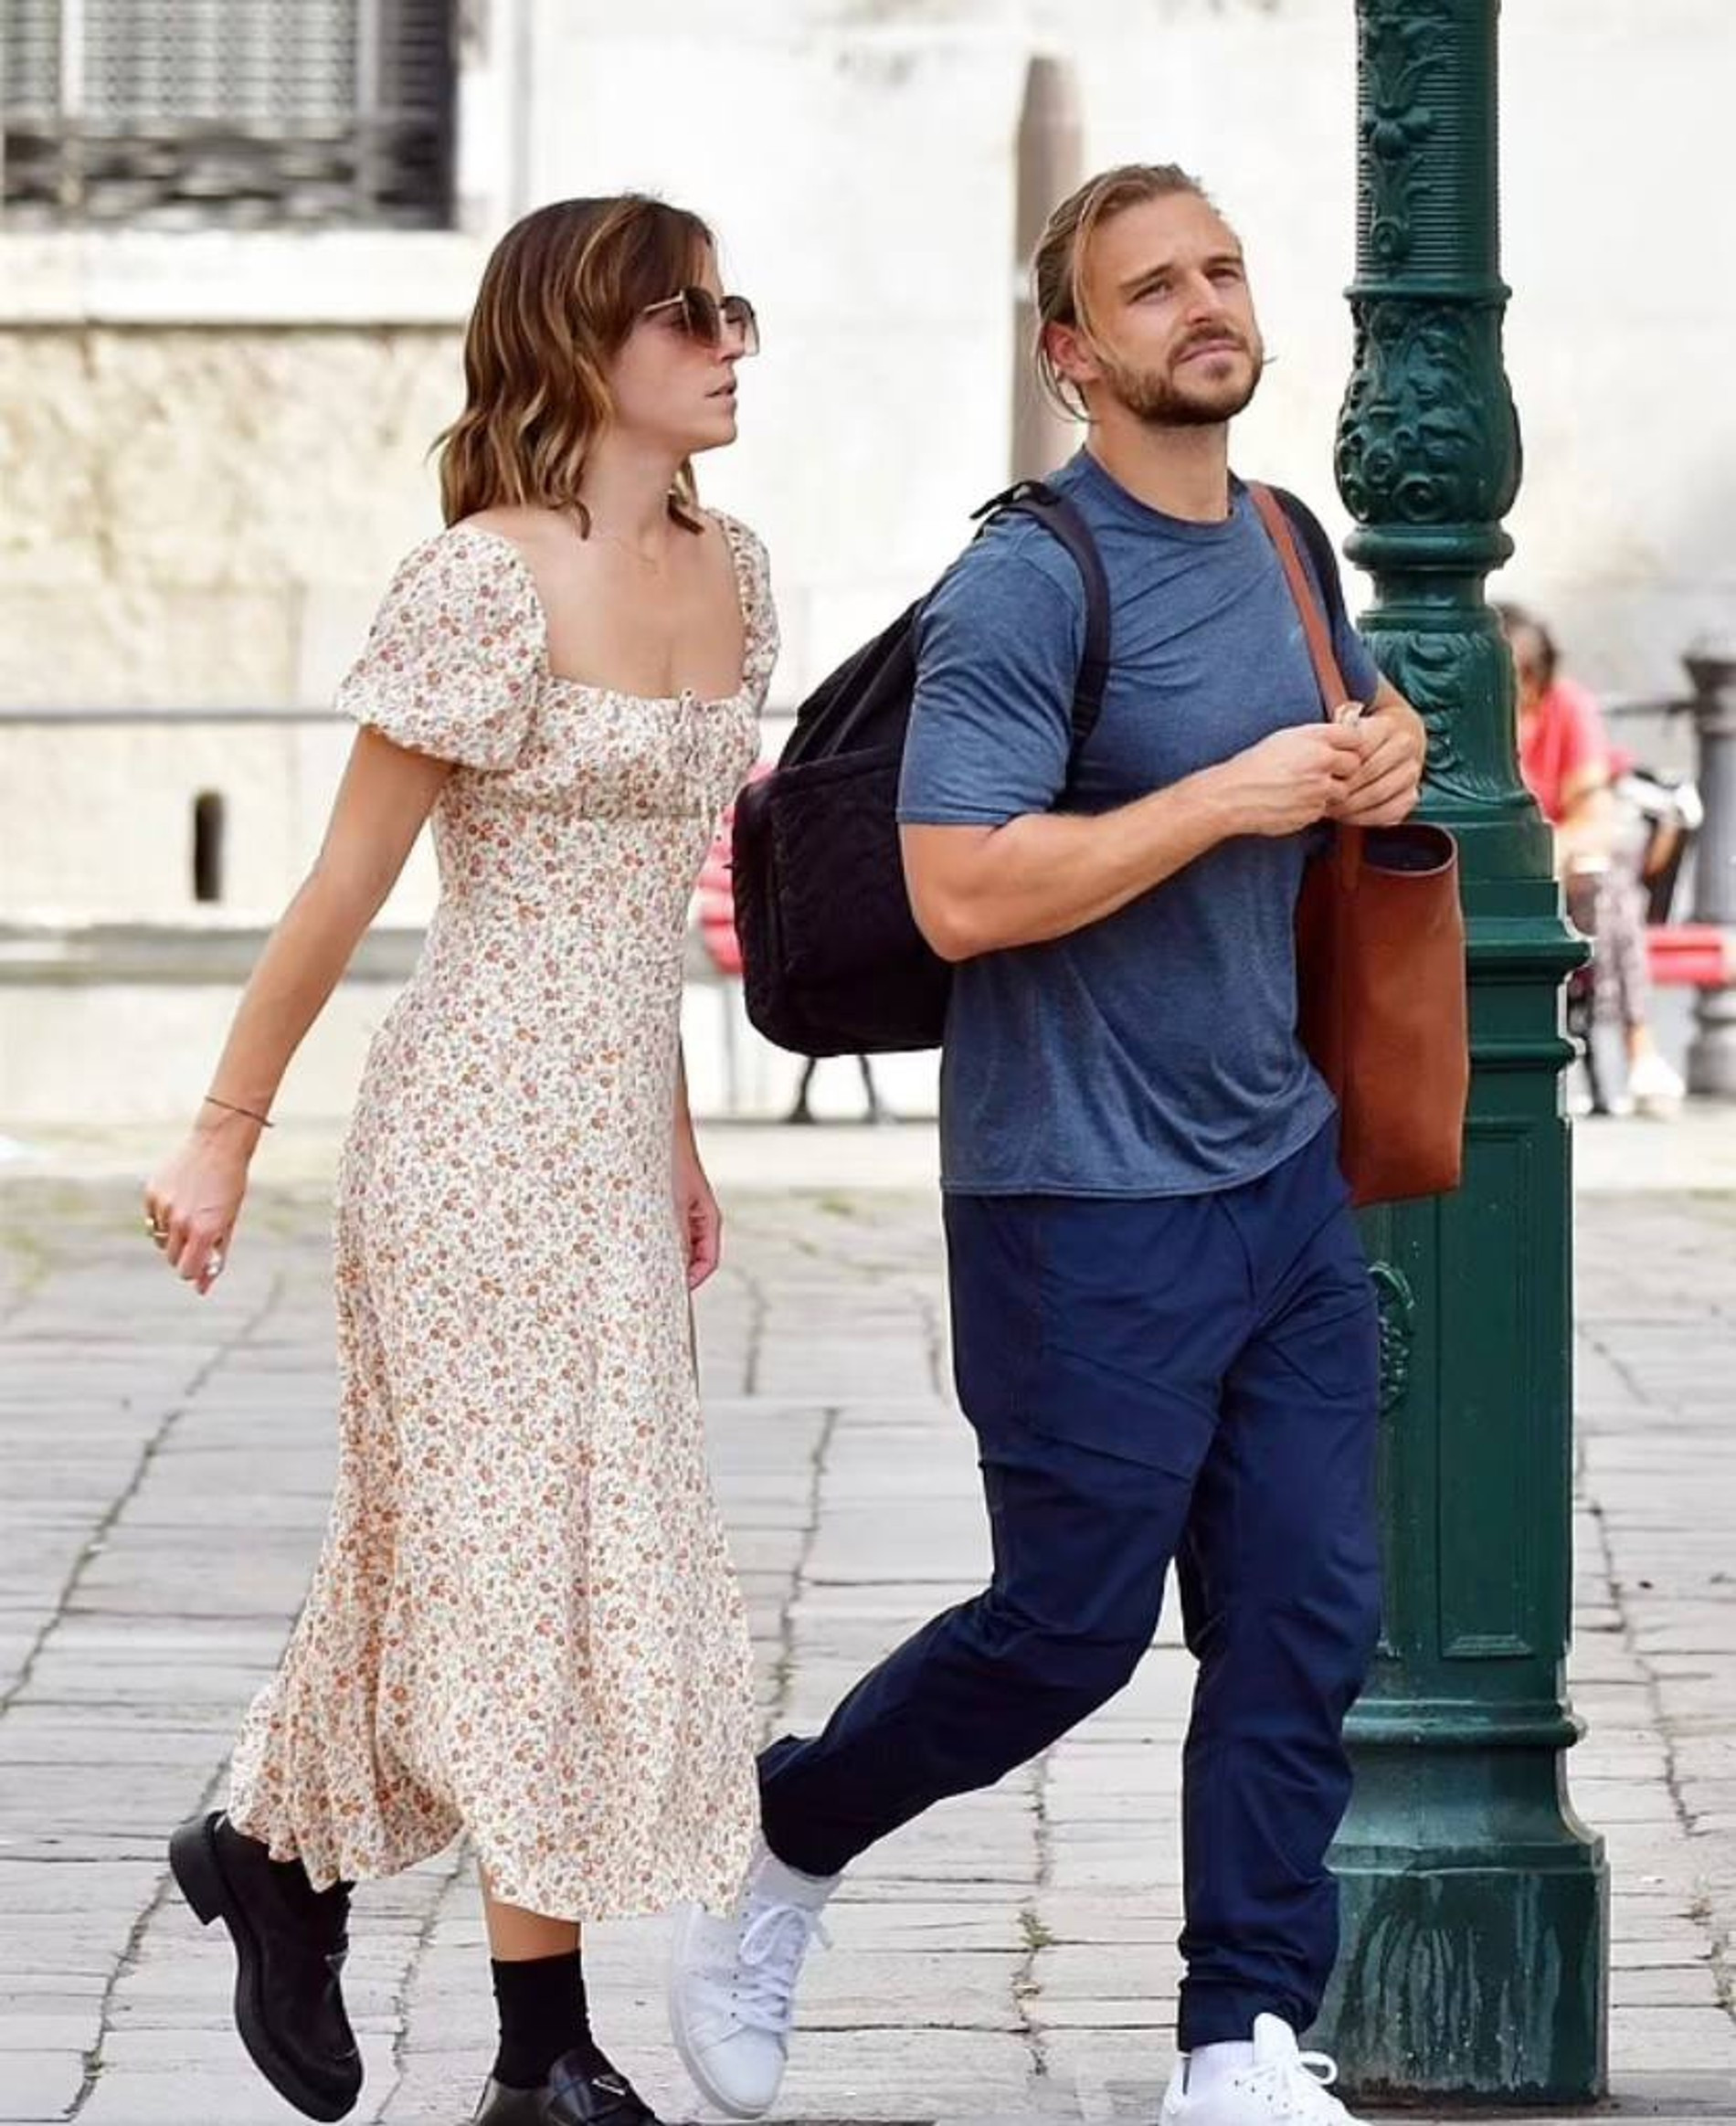 Эмма Уотсон и Брэндон Грин в Венеции
Фото: Daily Mail